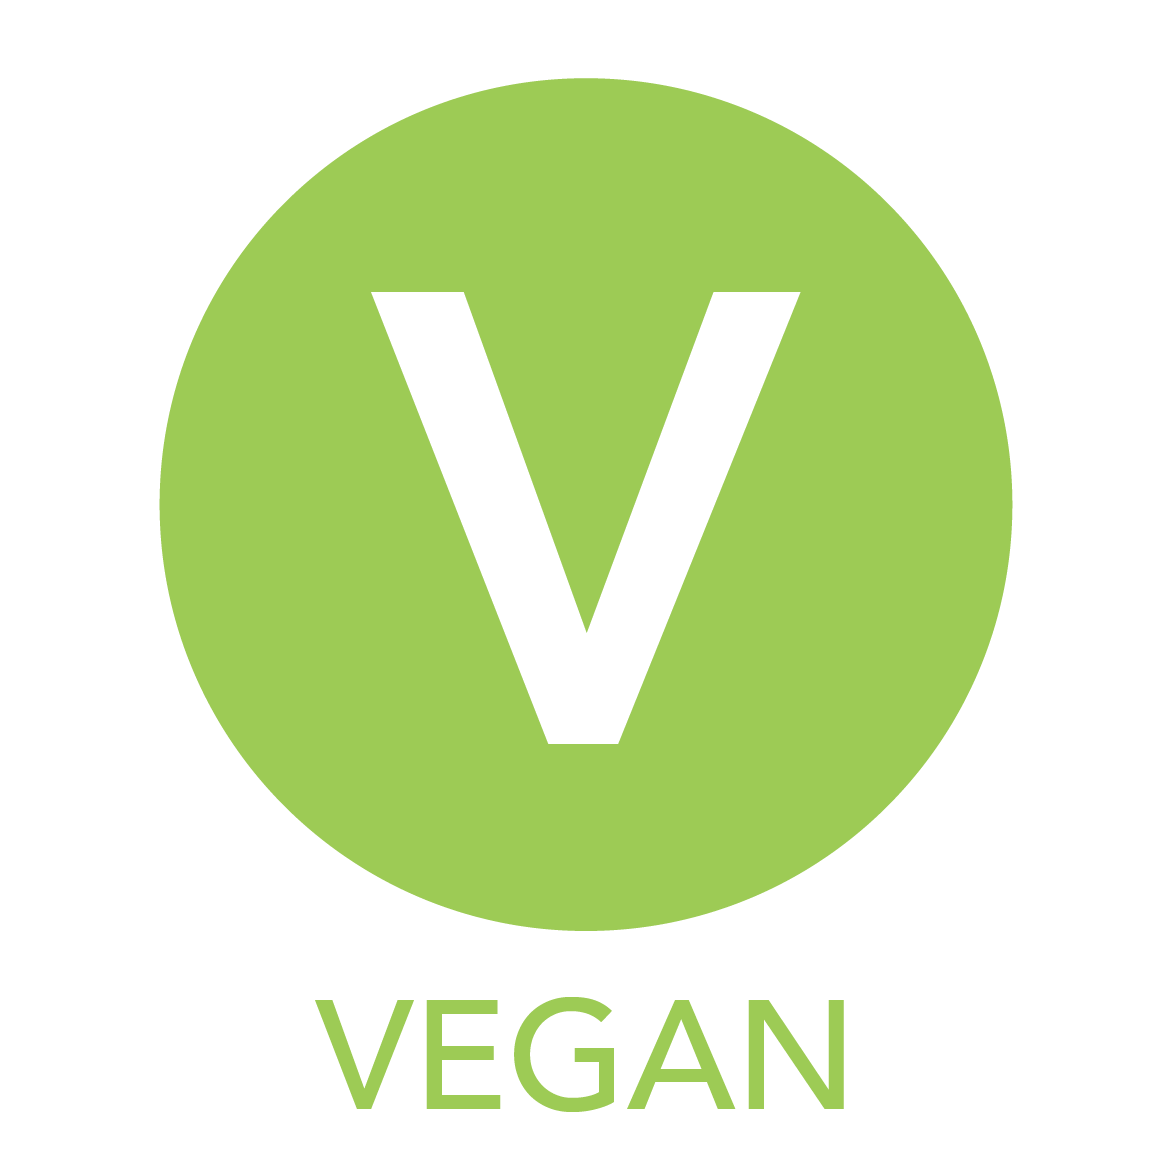 Vegan food options icon